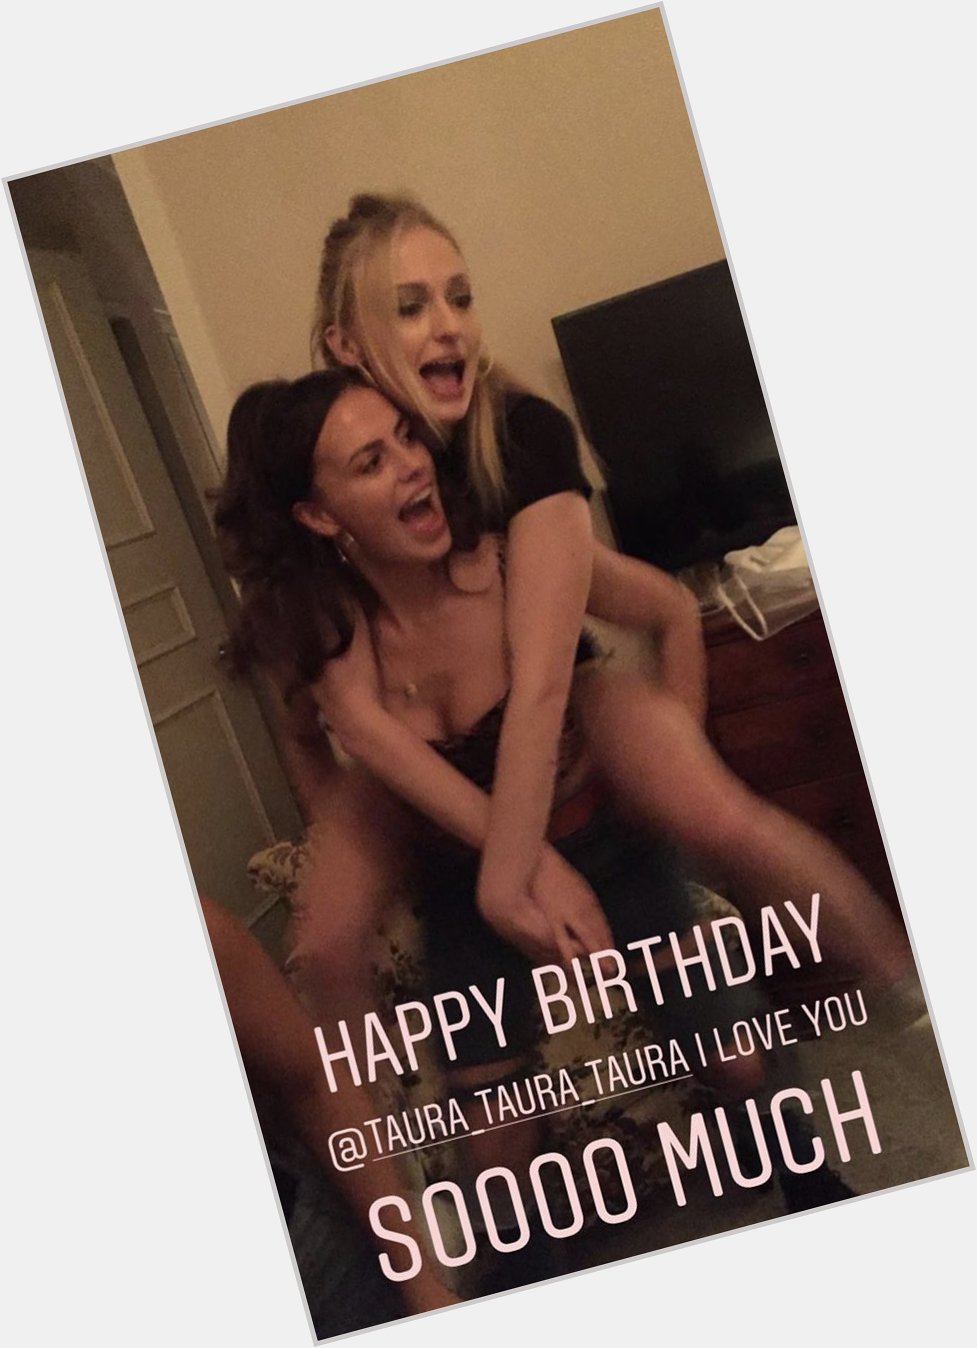 NEW: Sophie Turner wishing a happy birthday to her friend Taura on Instagram 